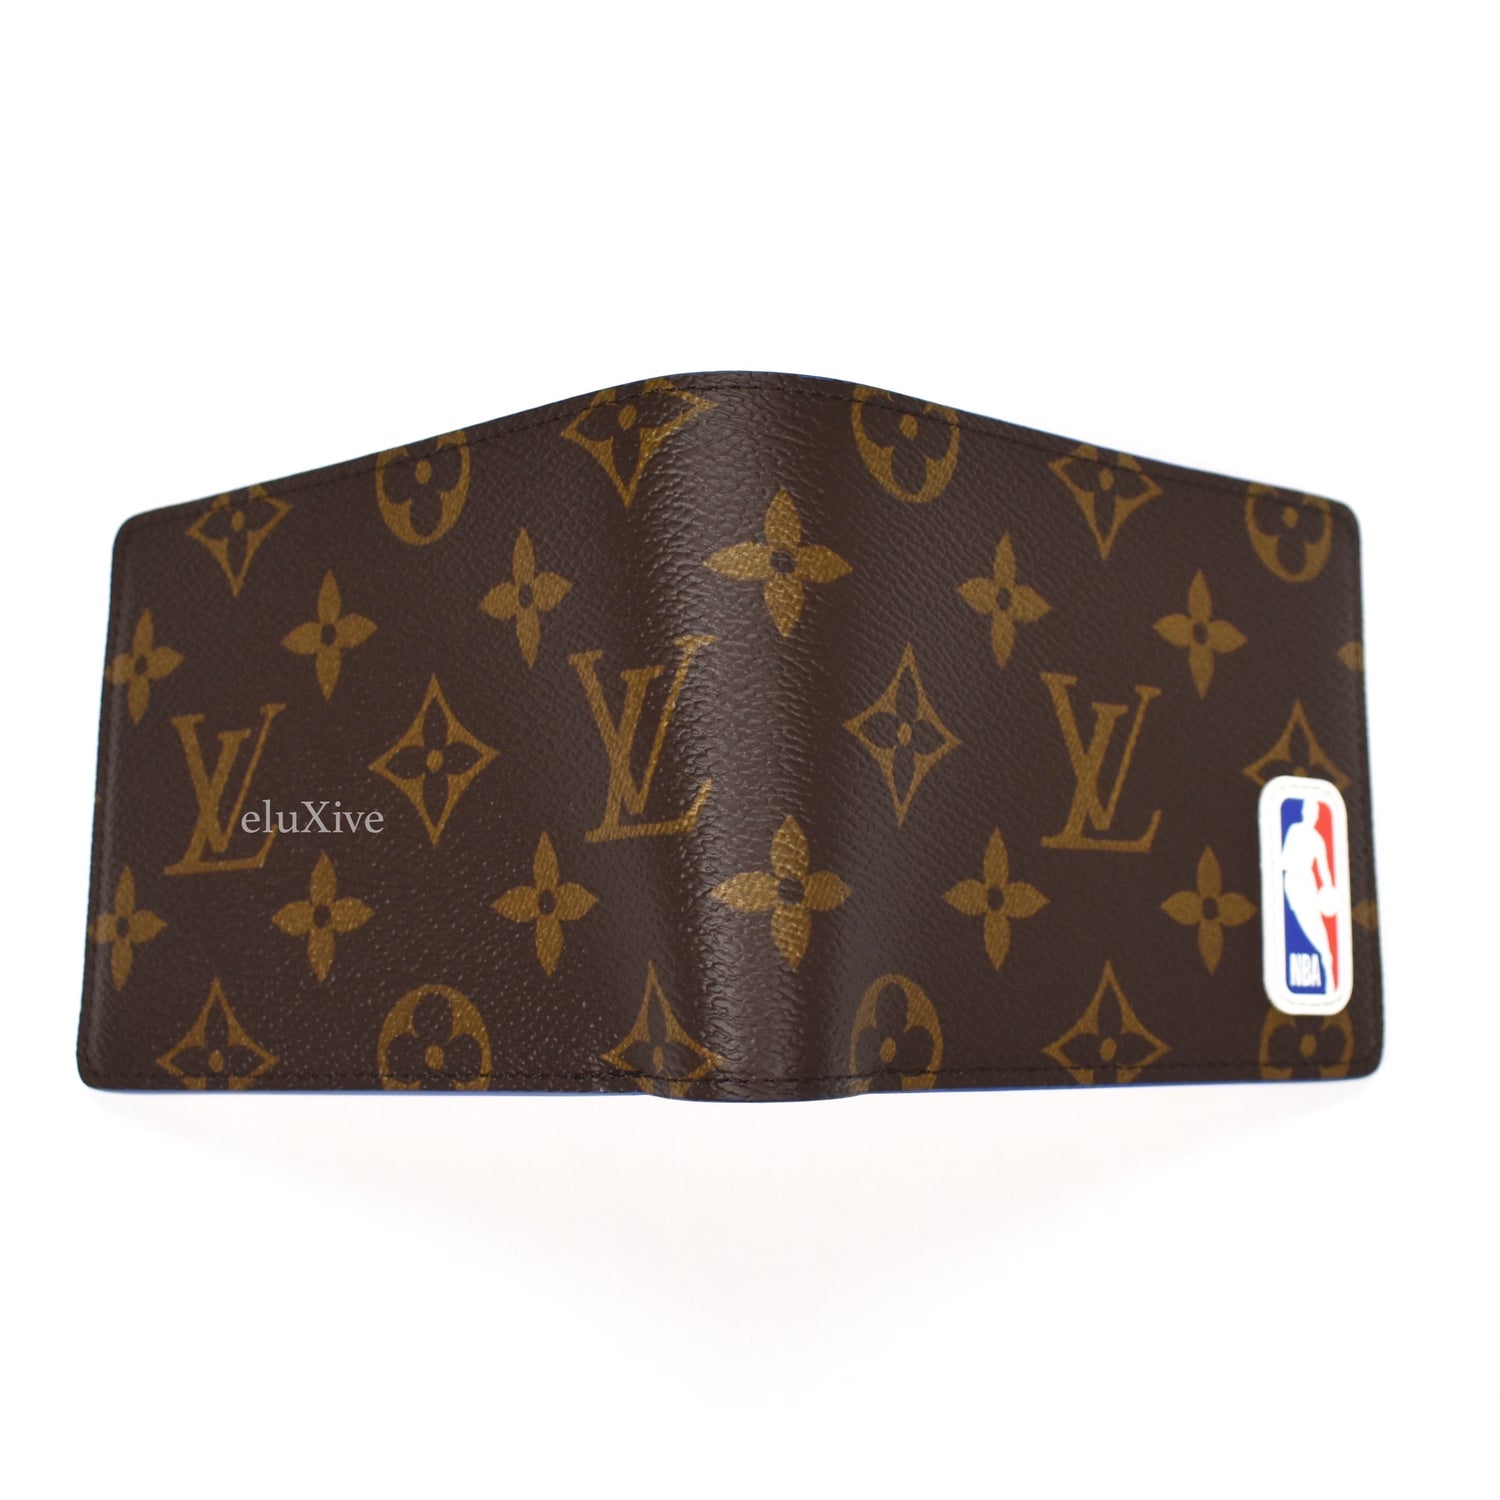 Louis Vuitton LV x NBA Brown Monogram Red White Blue Logo Bifold Multiple  Wallet